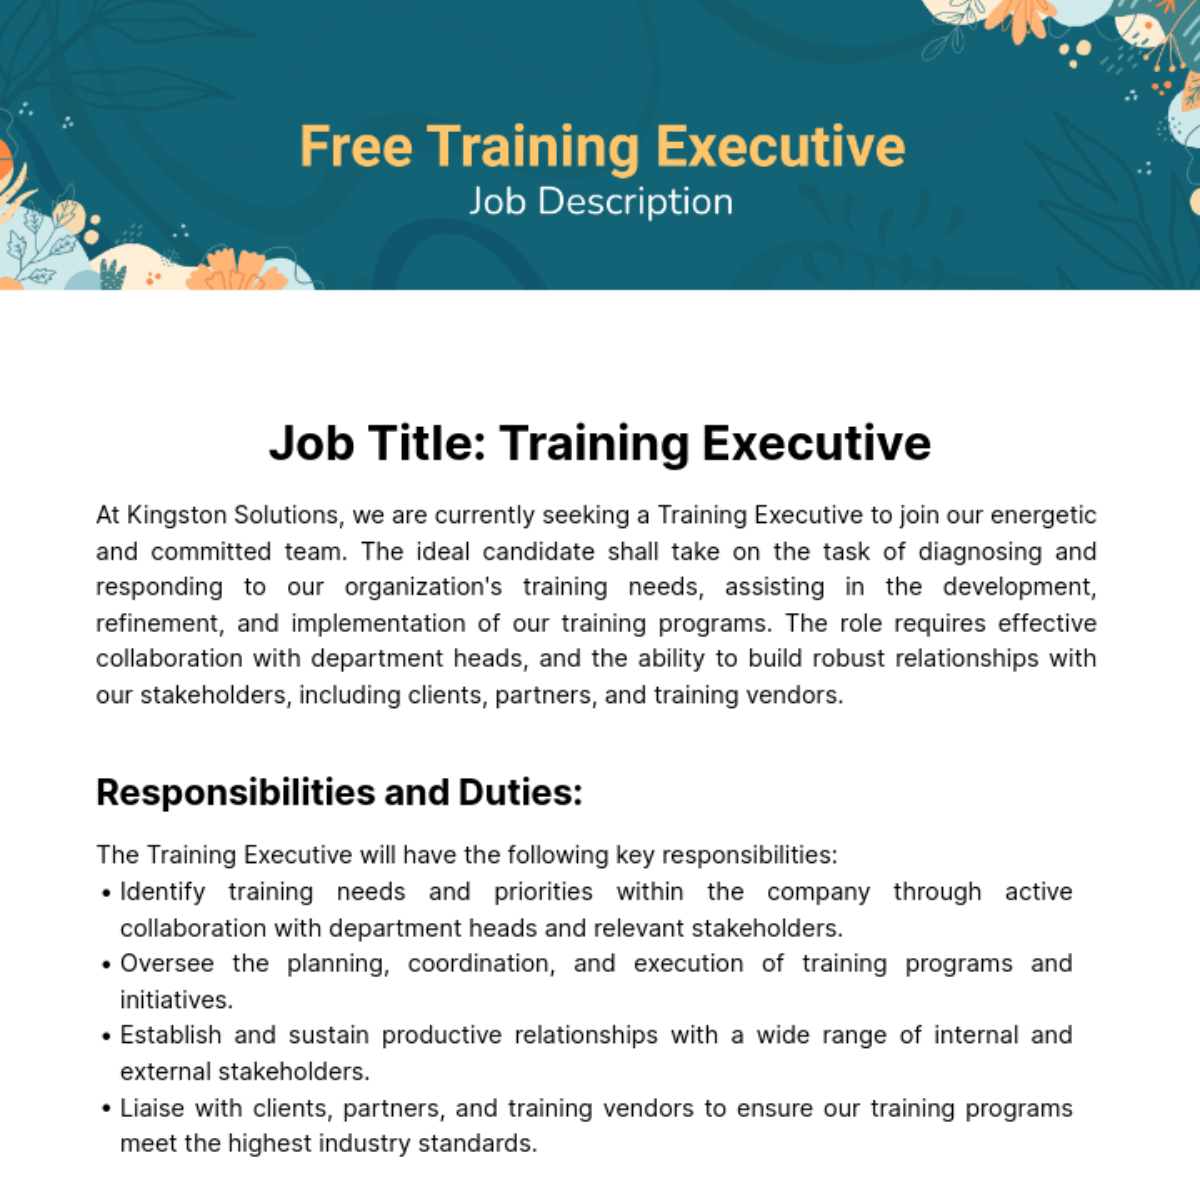 Free Training Executive Job Description Template